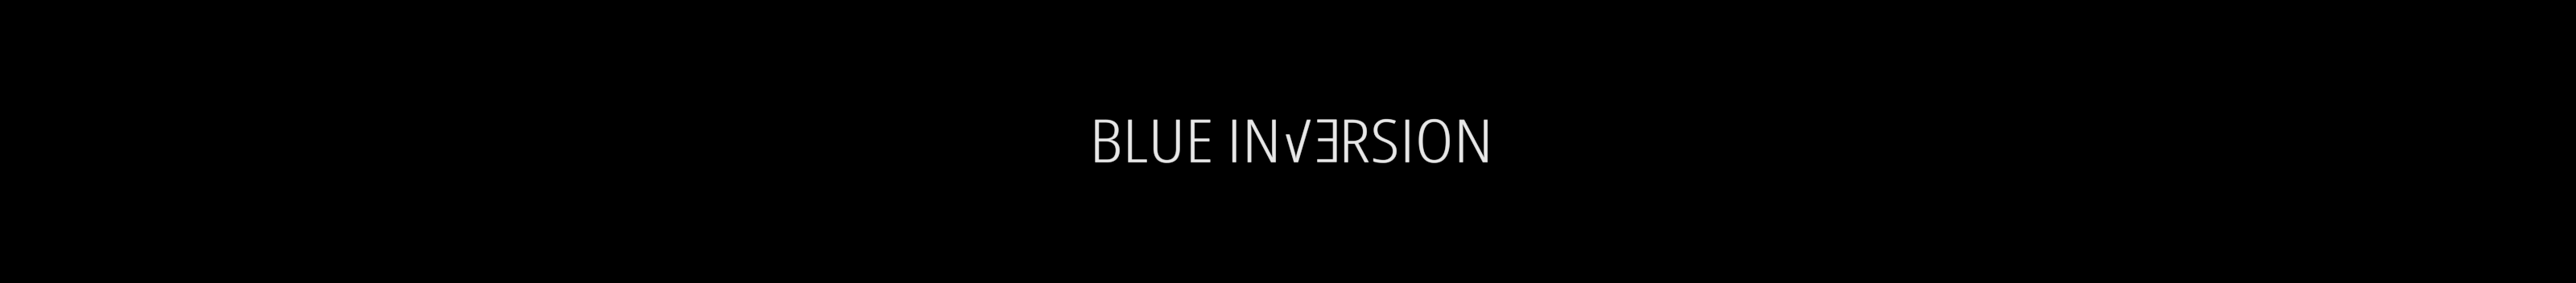 Blue Inversion's profile banner